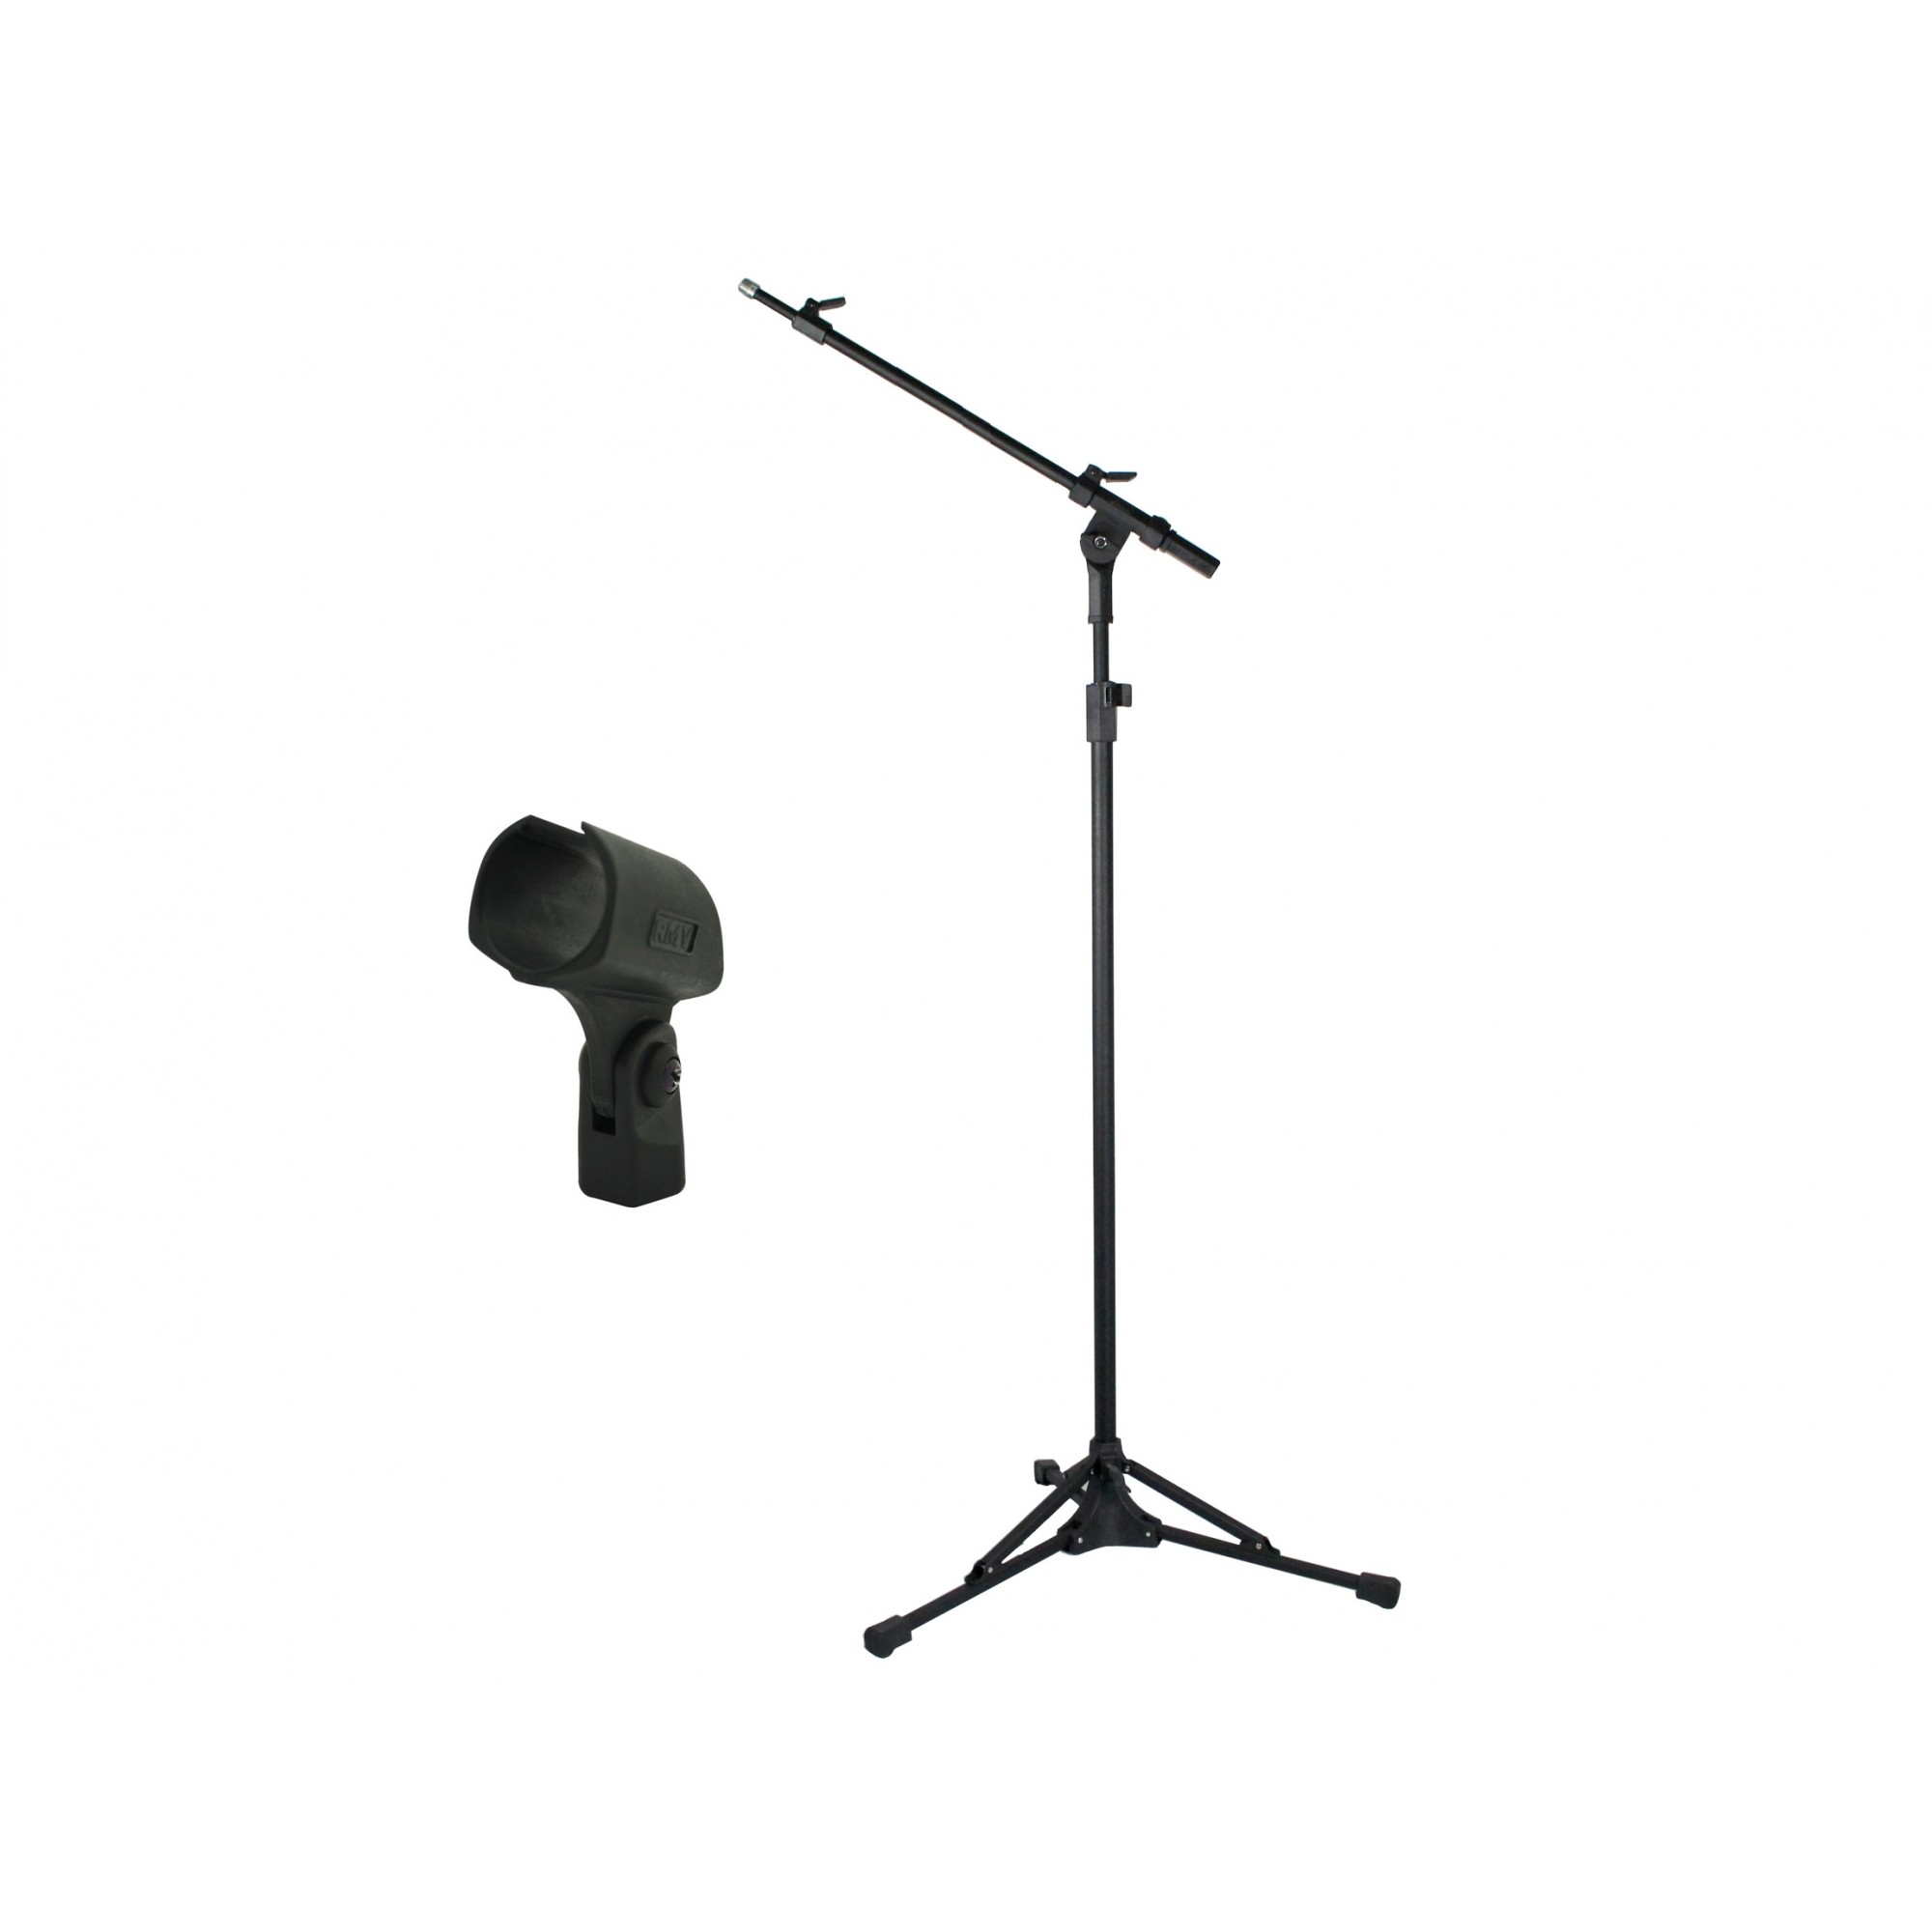 Pedestal Microfone Altura Max 2m Rmv Psu0090 + Cachimbo